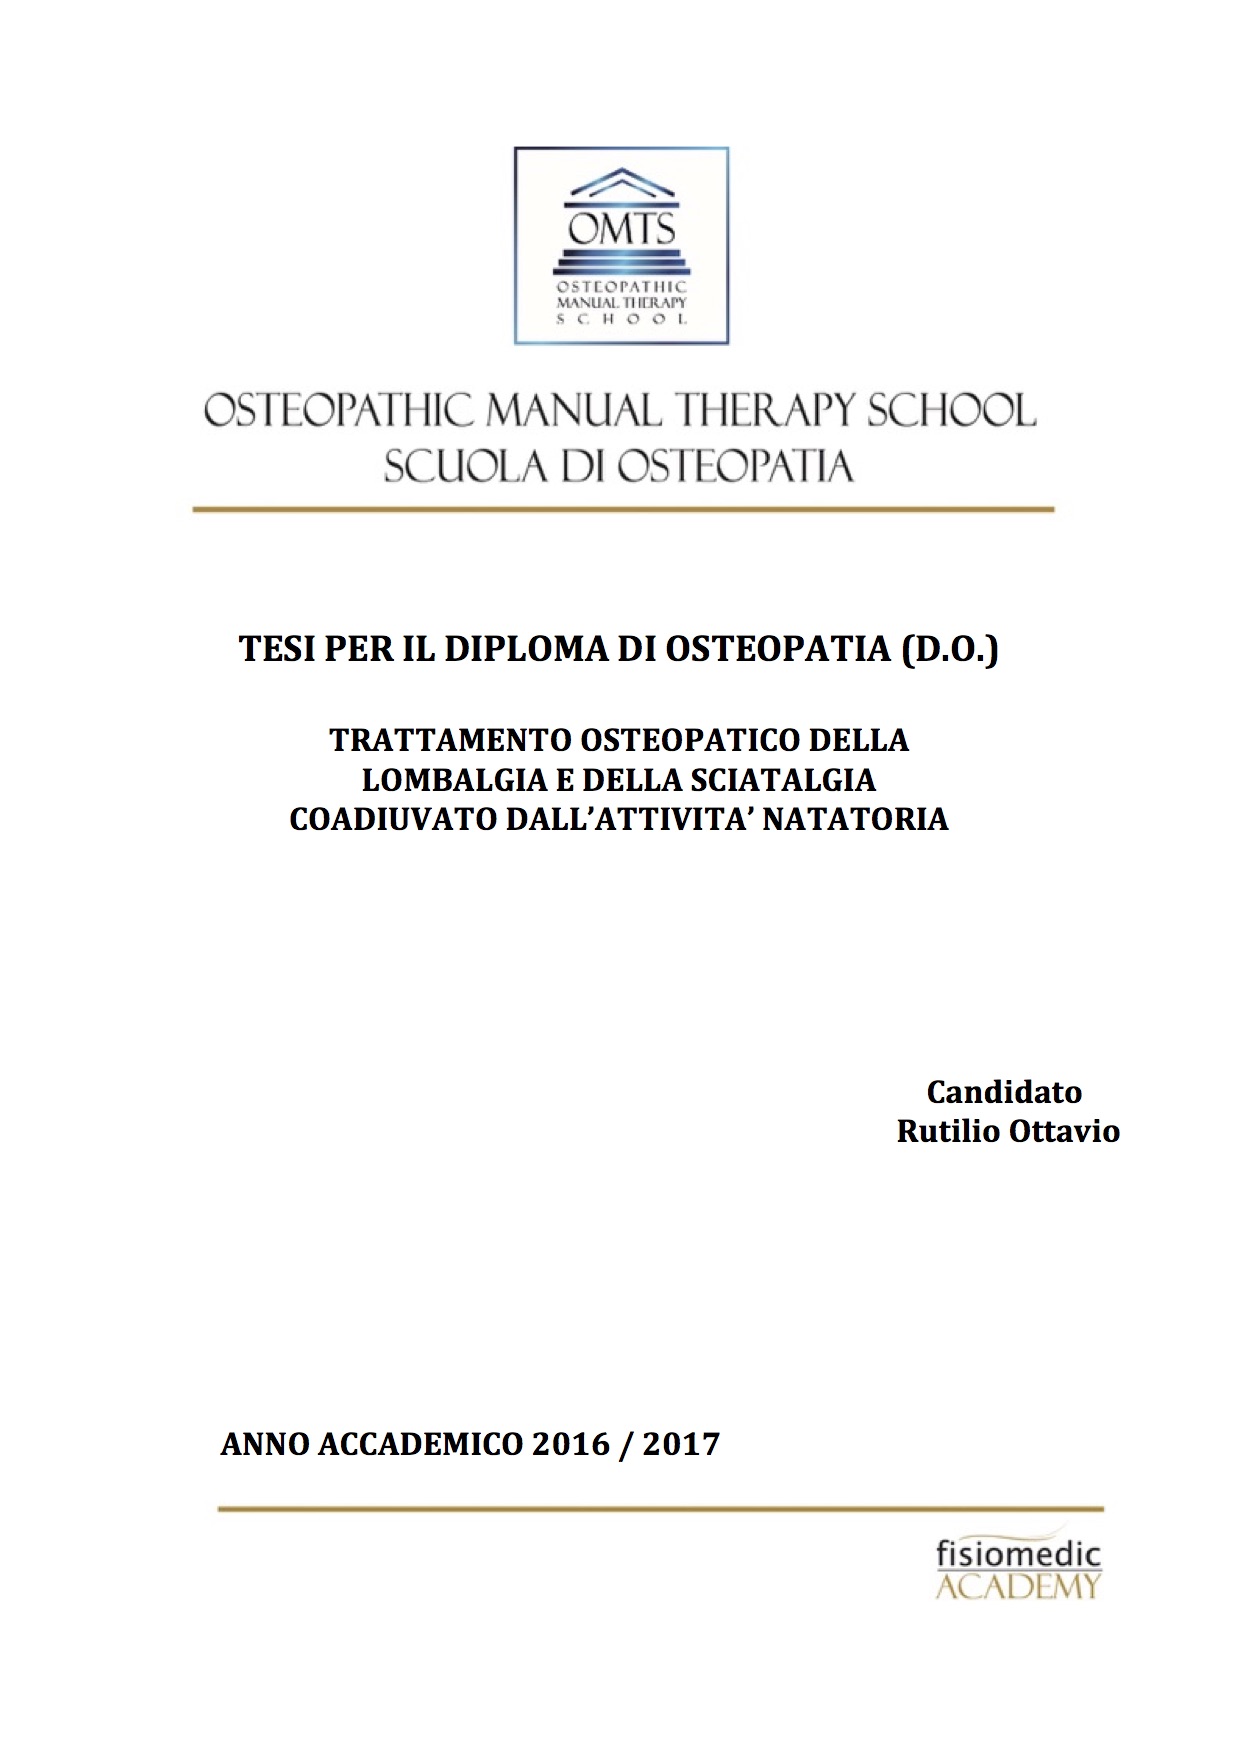 Rutilio Ottavio Tesi Diploma Osteopatia 2017